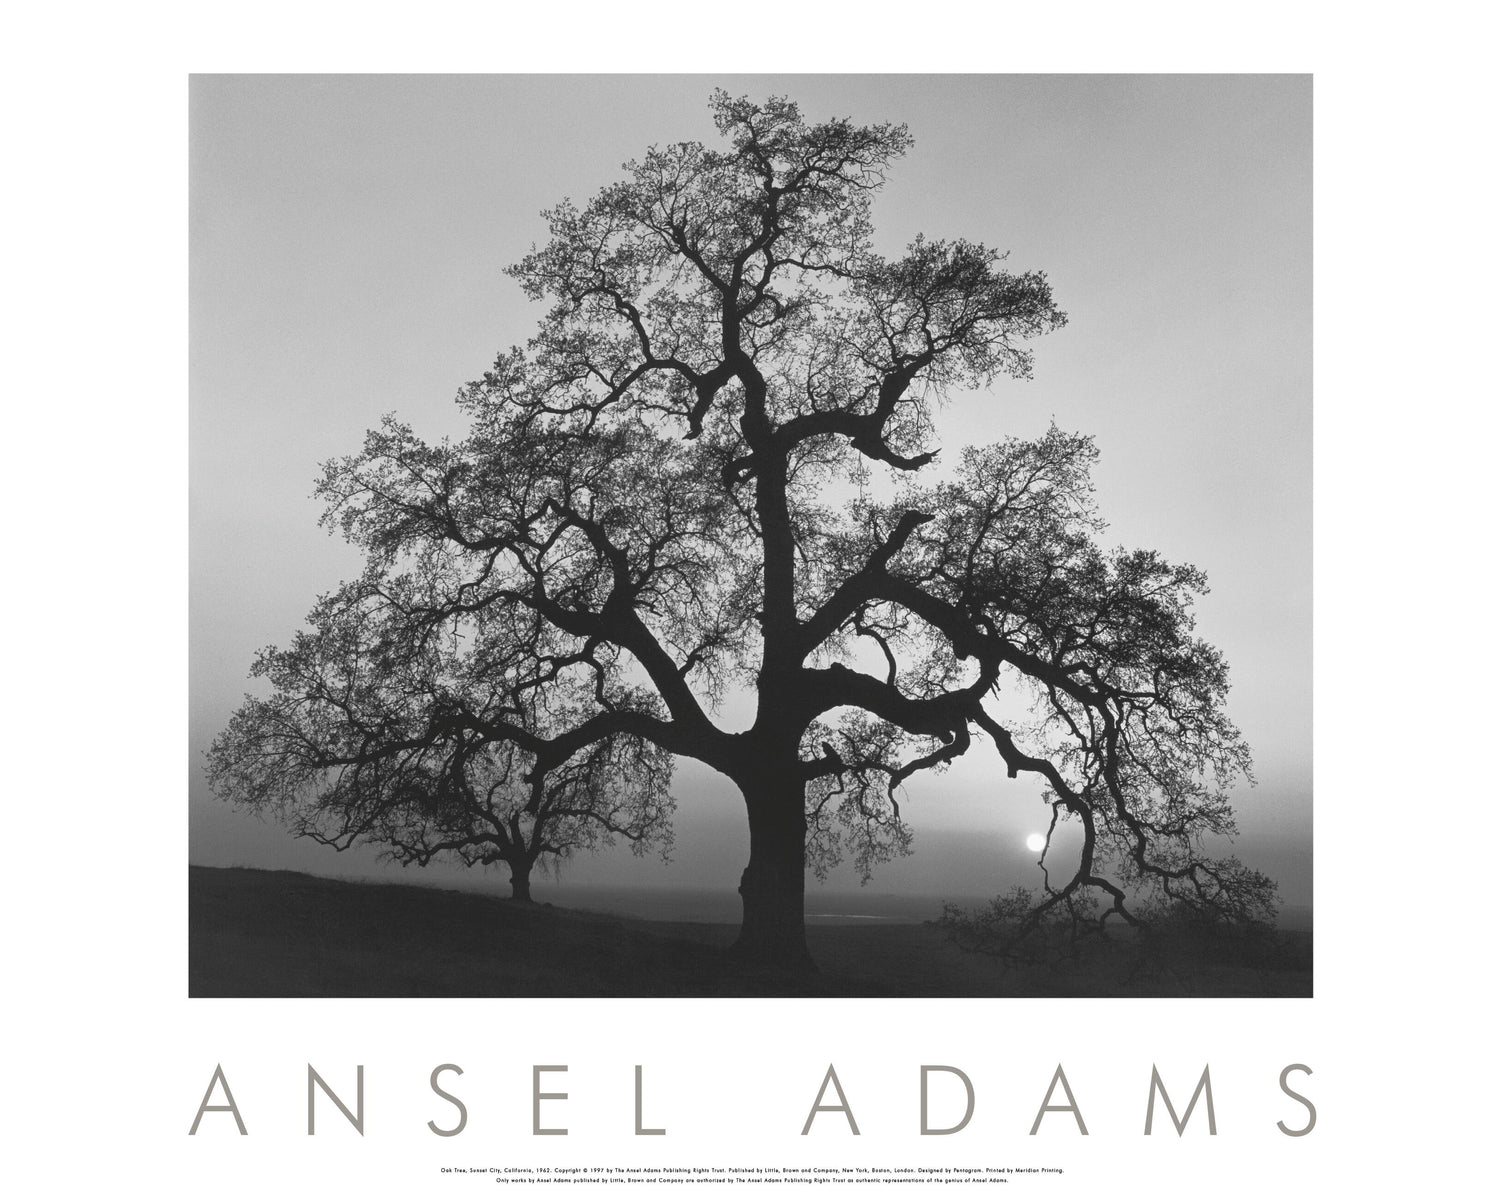 OAK TREE, SUNSET CITY - ANSEL ADAMS AUTHORIZED EDITION POSTER